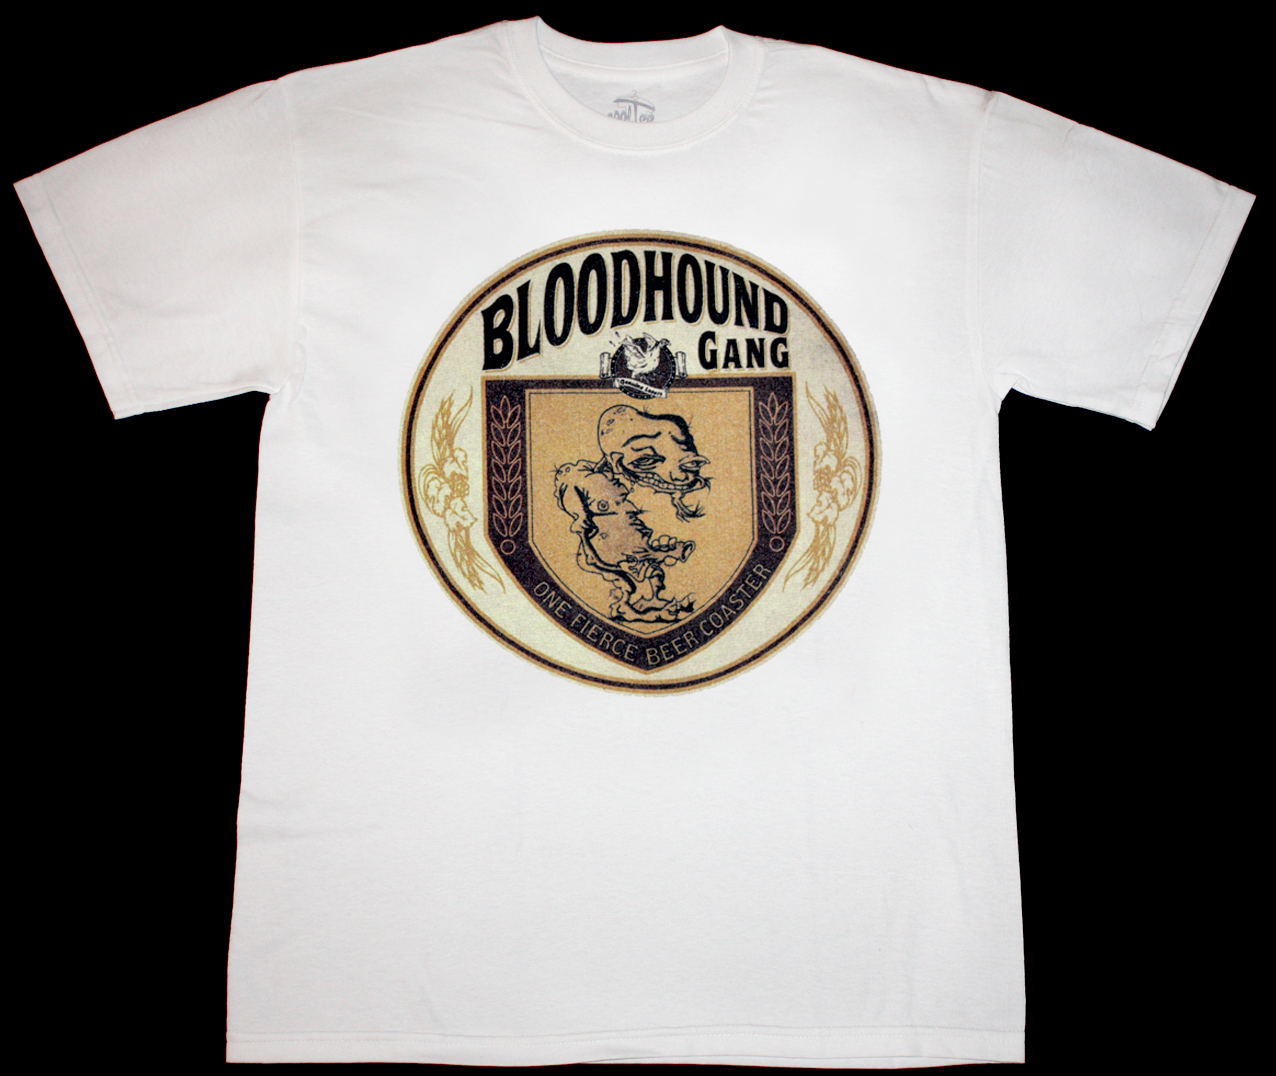 Bloodhound gang тексты. Bloodhound gang t-Shirt. Bloodhound gang футболка. Bloodhound gang логотип. Bloodhound gang мерч.